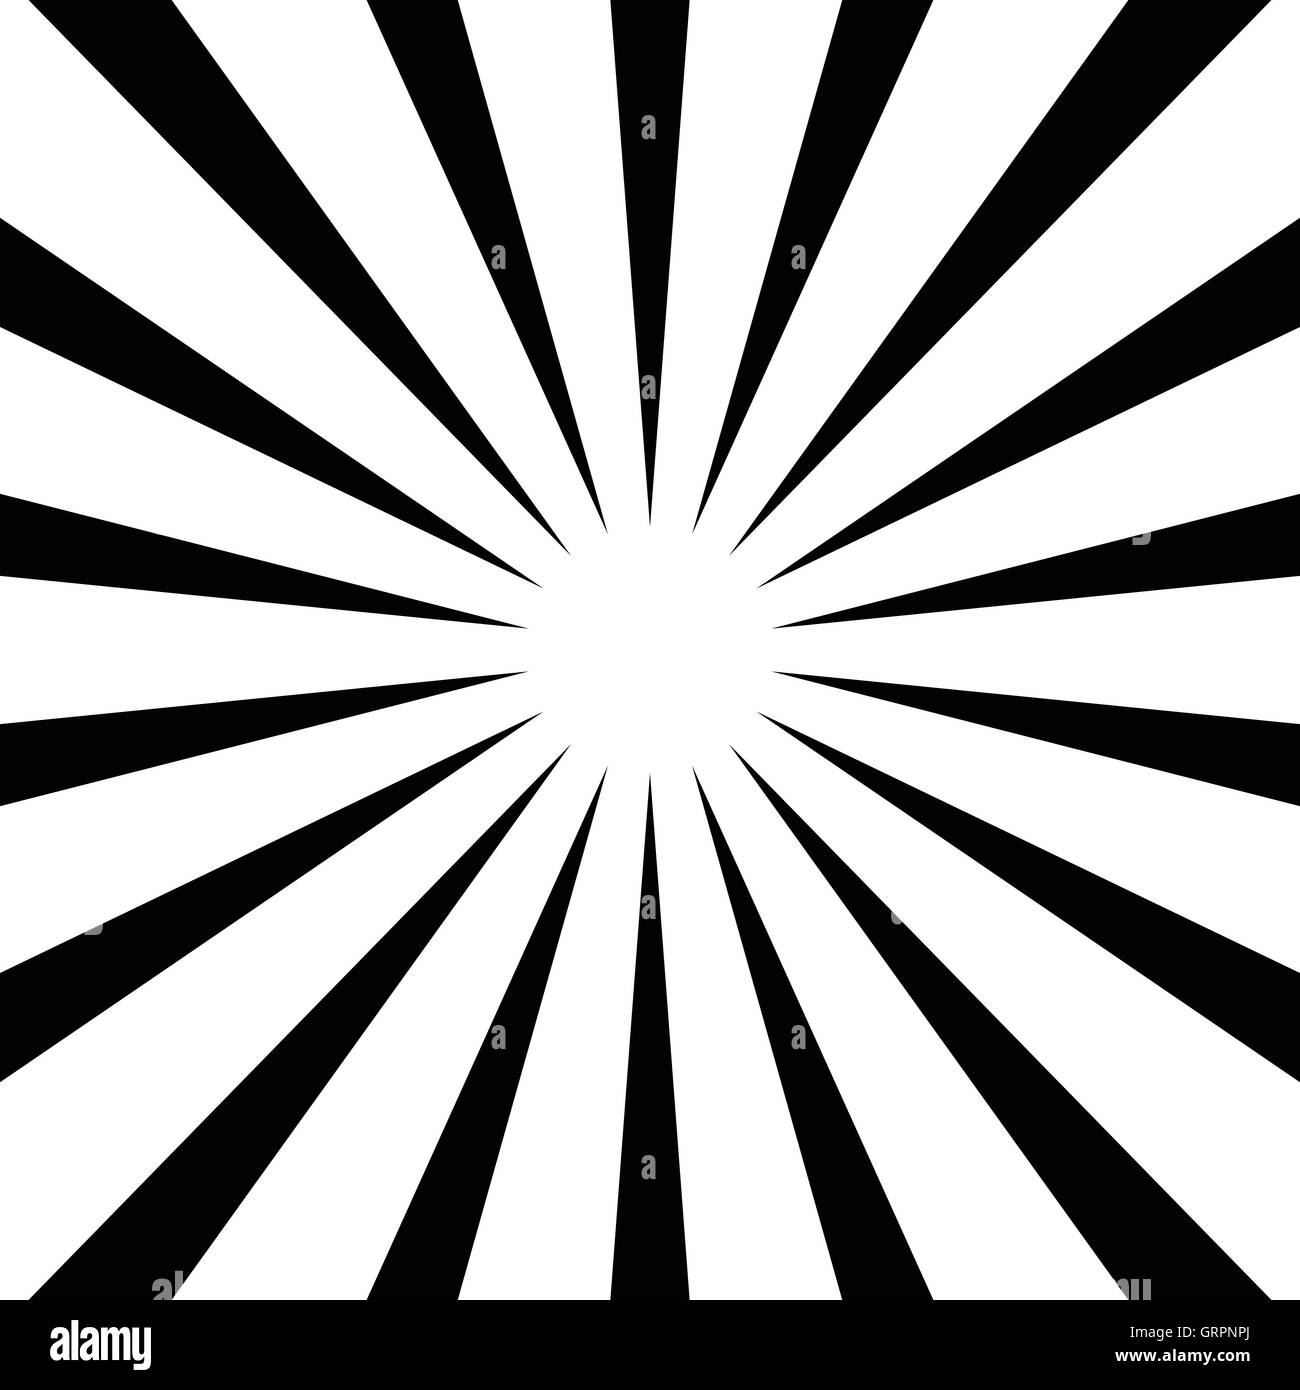 Circular, stripes lines geometric pattern. Monochrome illustration. Stock Vector